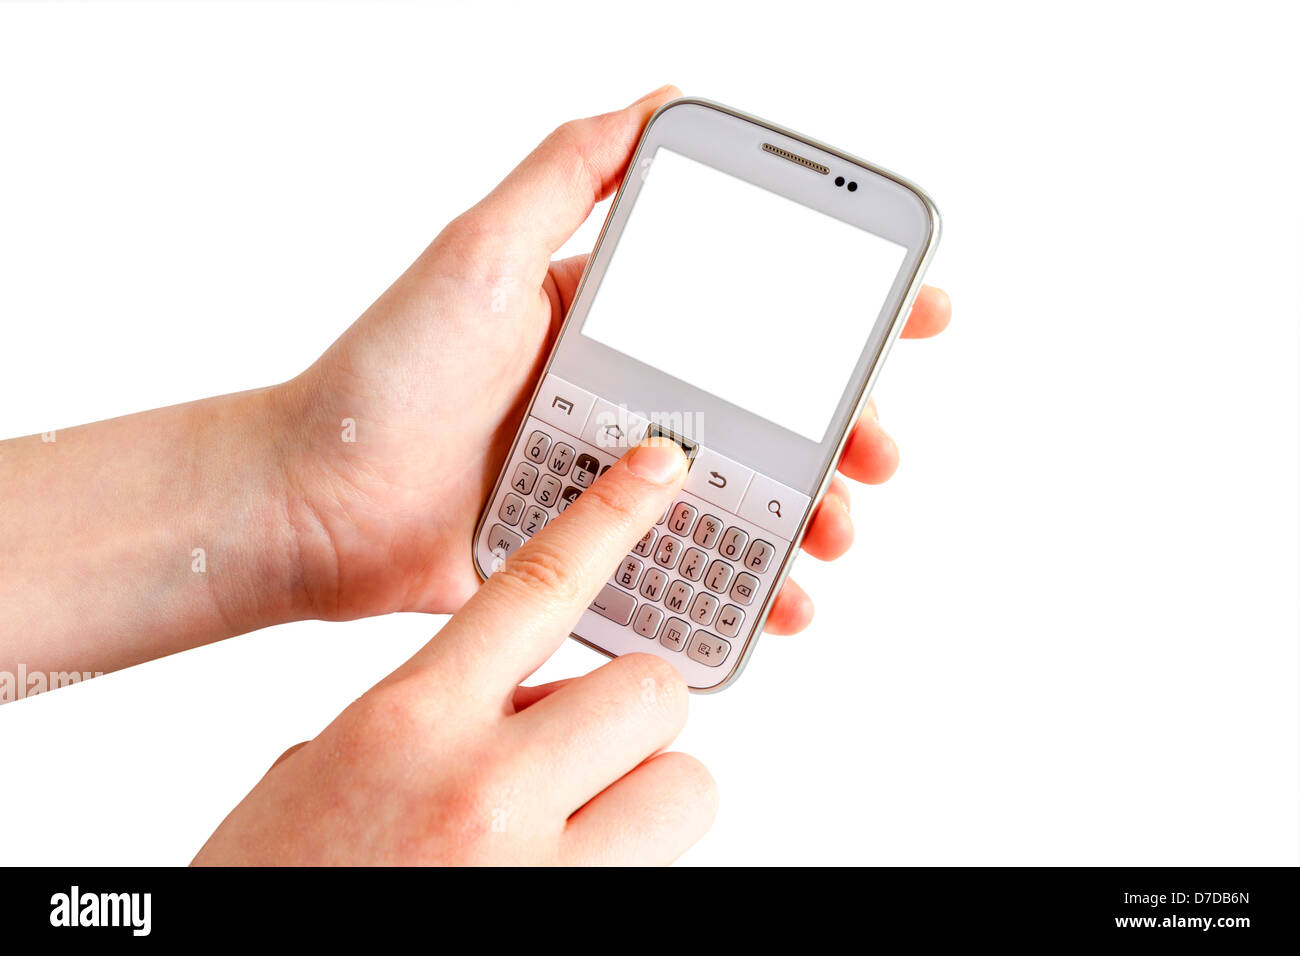 Hands holding white smart phone on white background Stock Photo